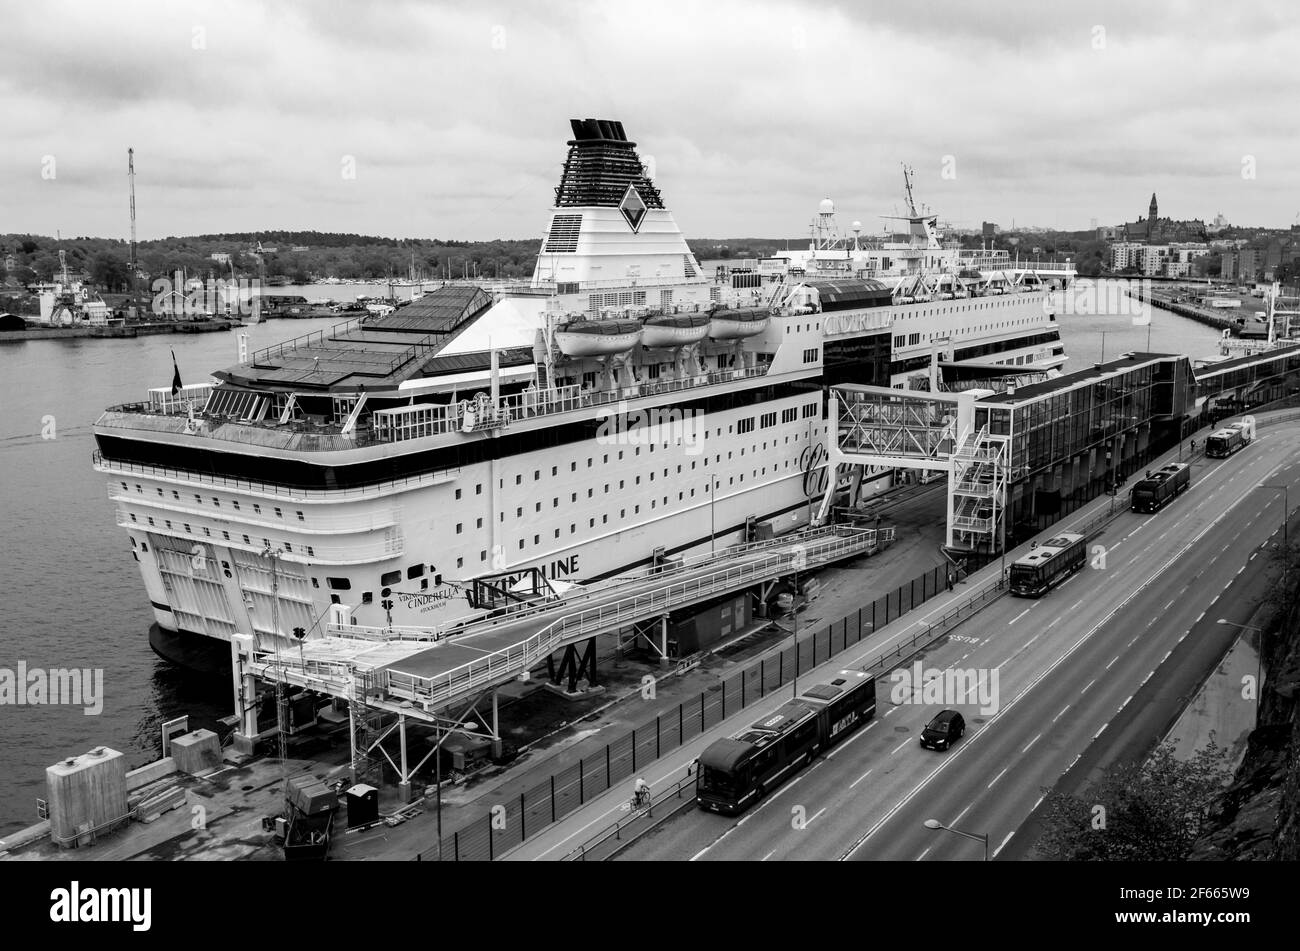 The Baltic Sea cruise ship, MS Cinderella, docked at Katarina Sofia, Stockholm, Sweden. B&W Stock Photo